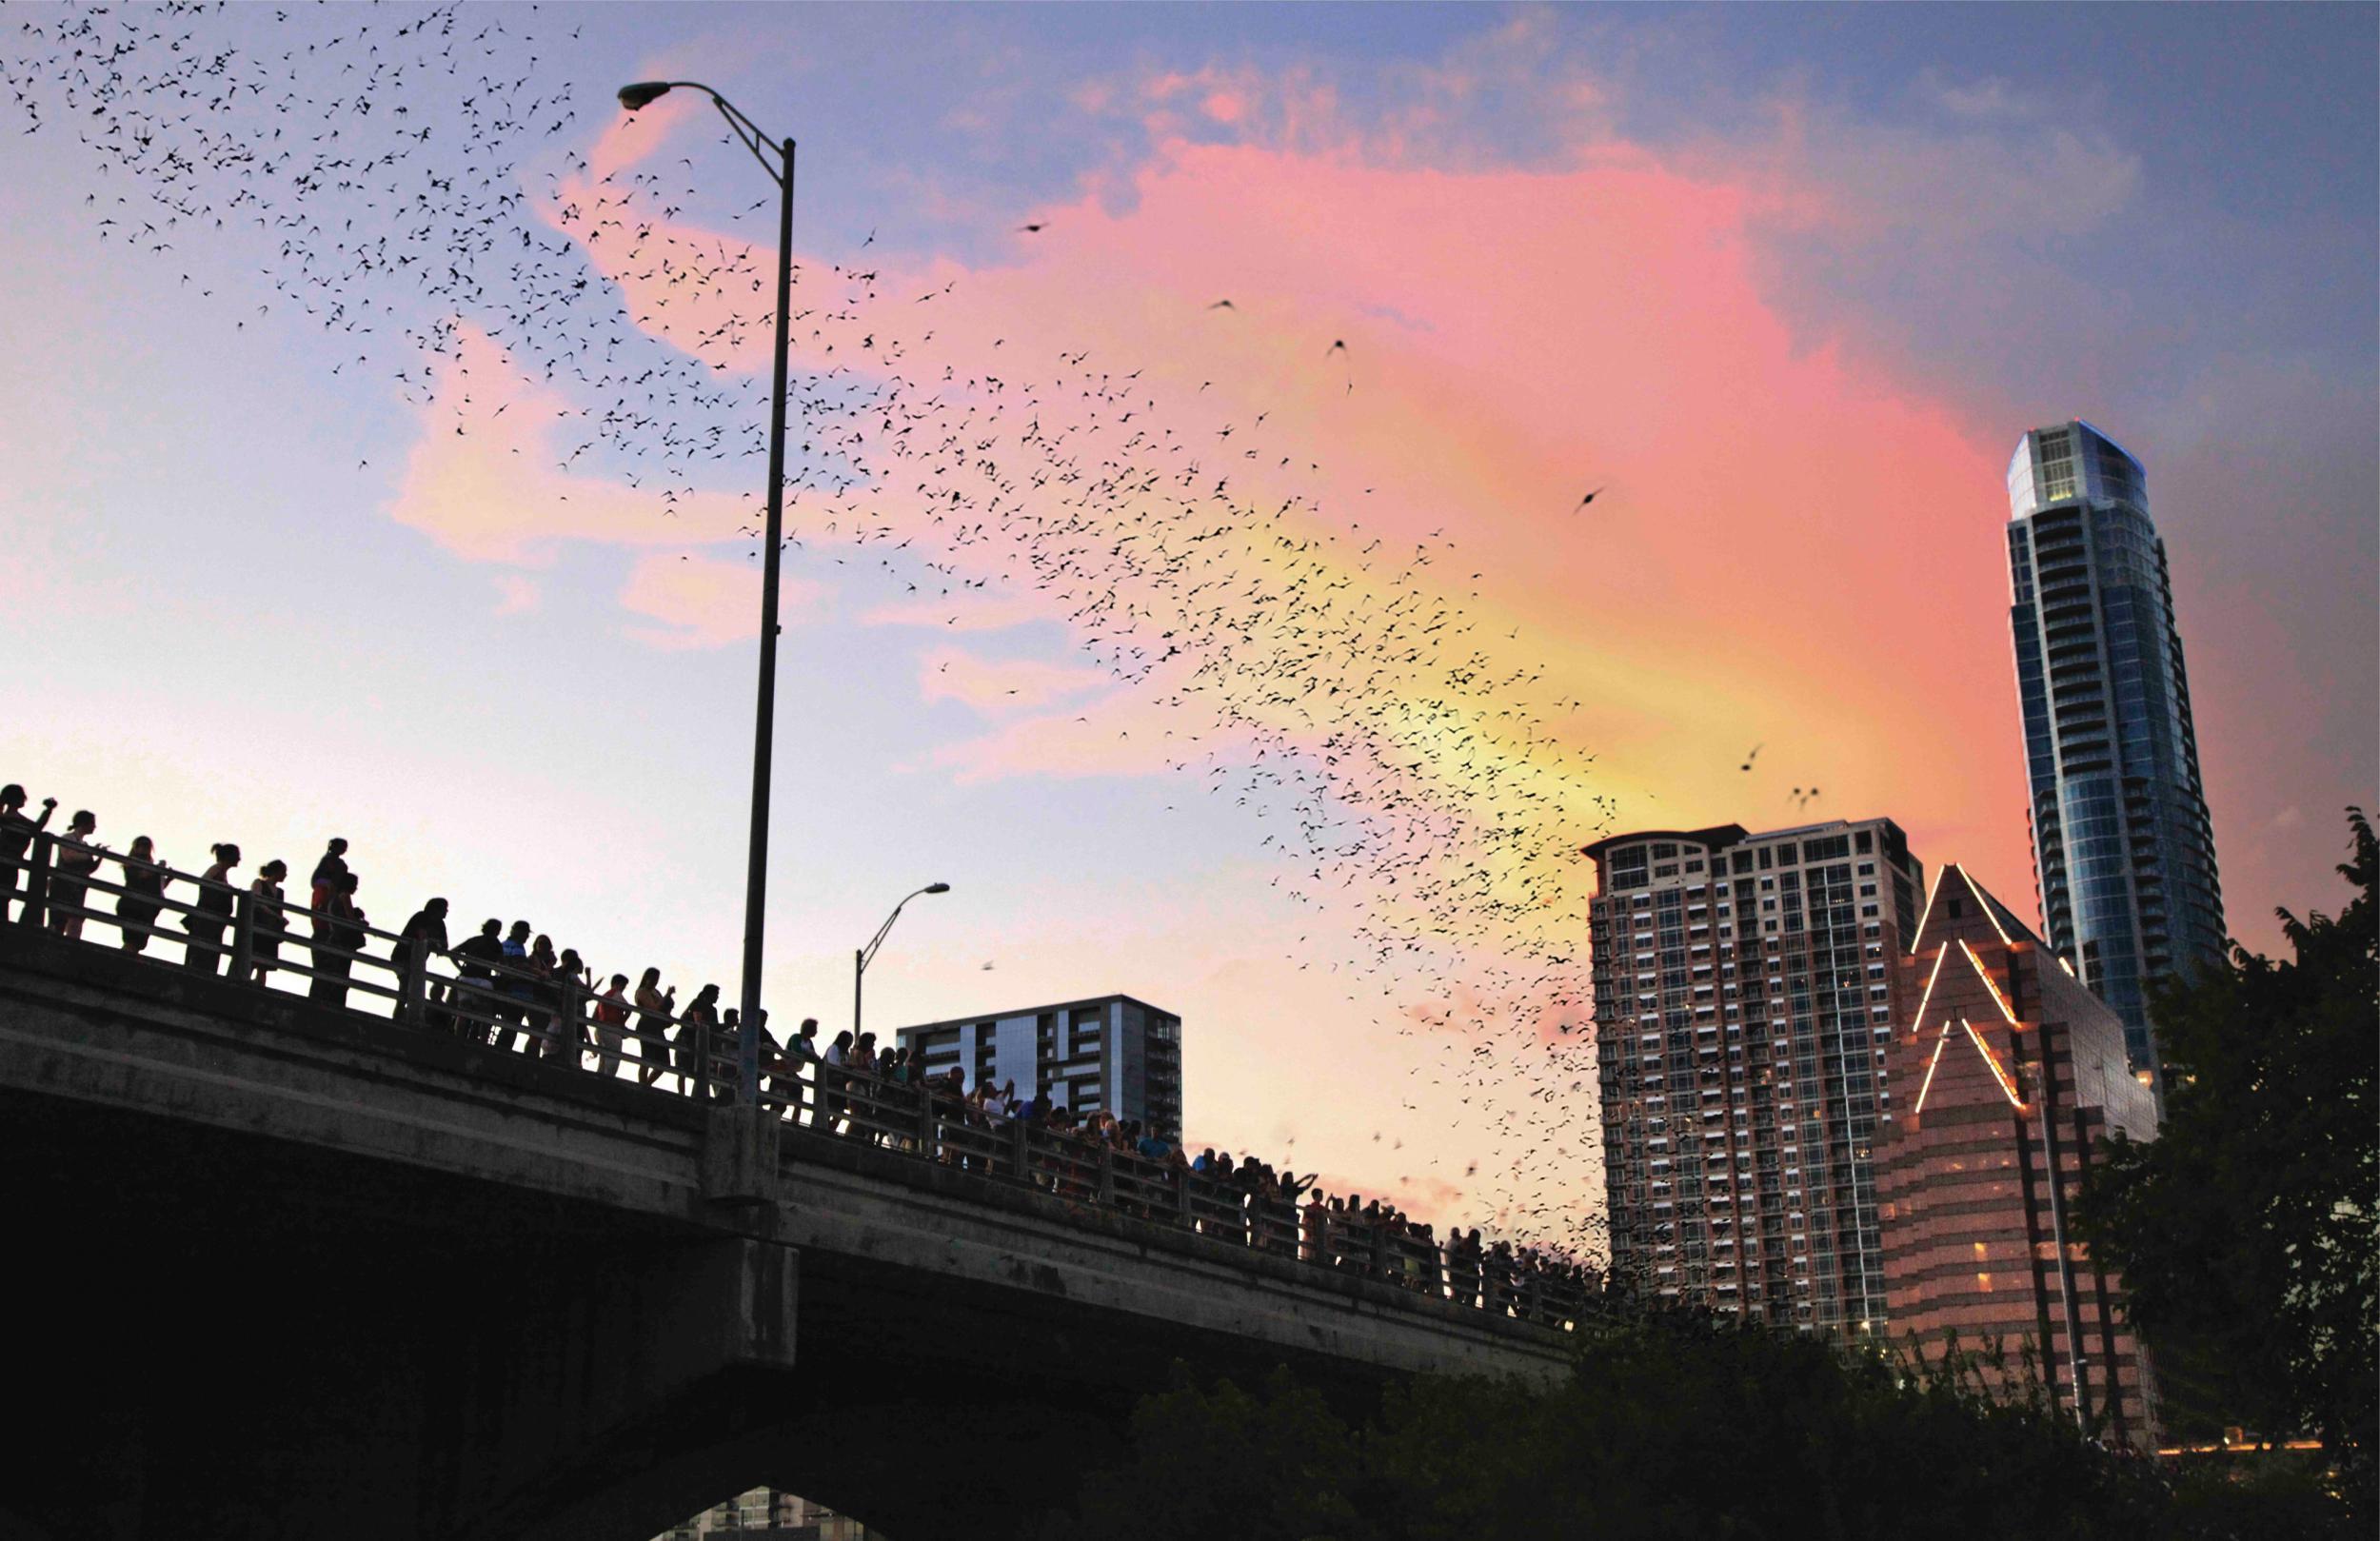 Austin’s Congress Avenue Bridge hosts the largest bat colony in North America